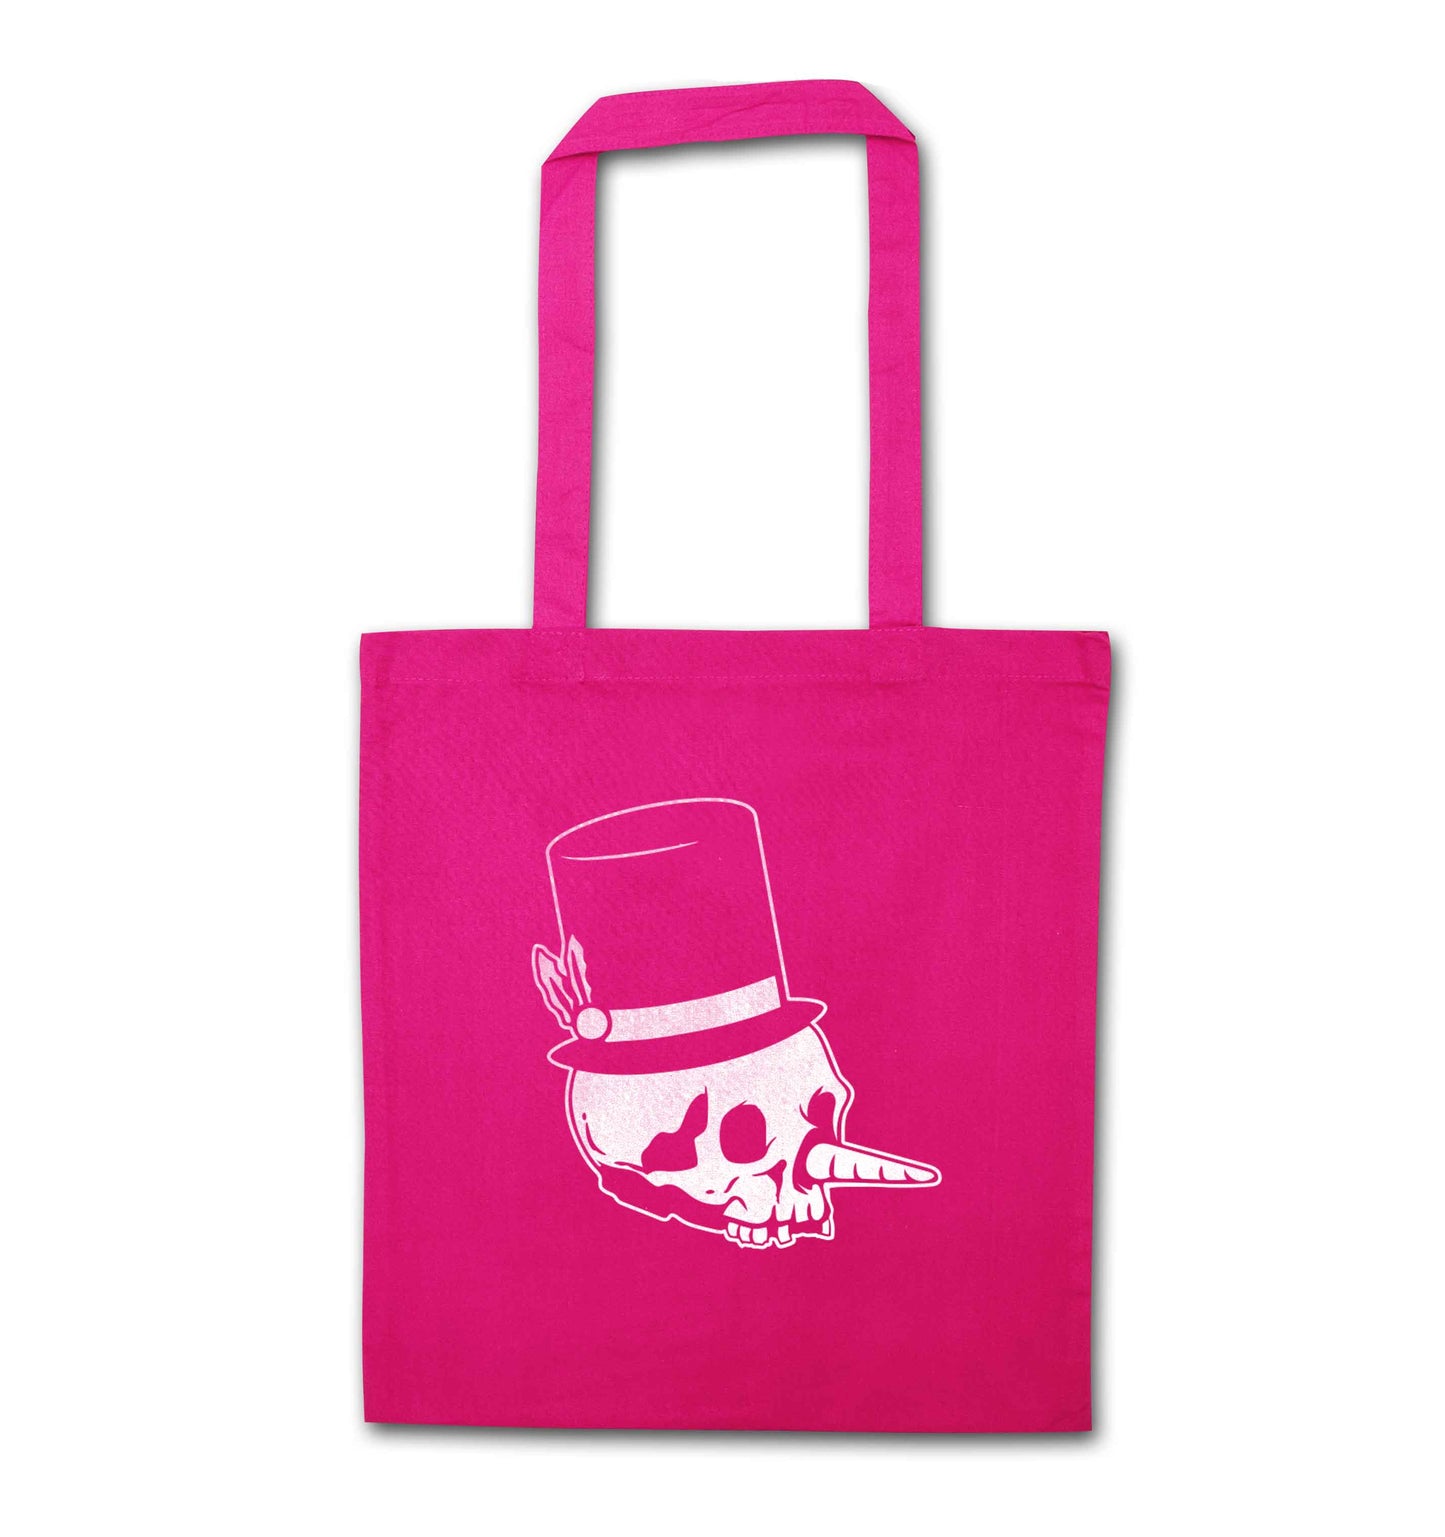 Snowman punk pink tote bag